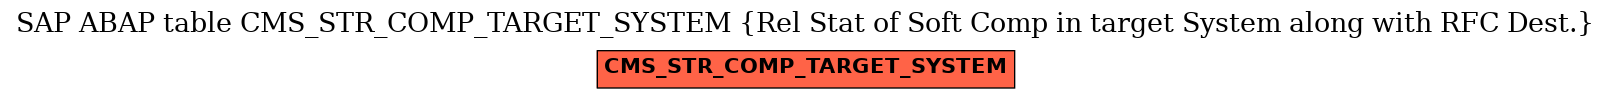 E-R Diagram for table CMS_STR_COMP_TARGET_SYSTEM (Rel Stat of Soft Comp in target System along with RFC Dest.)